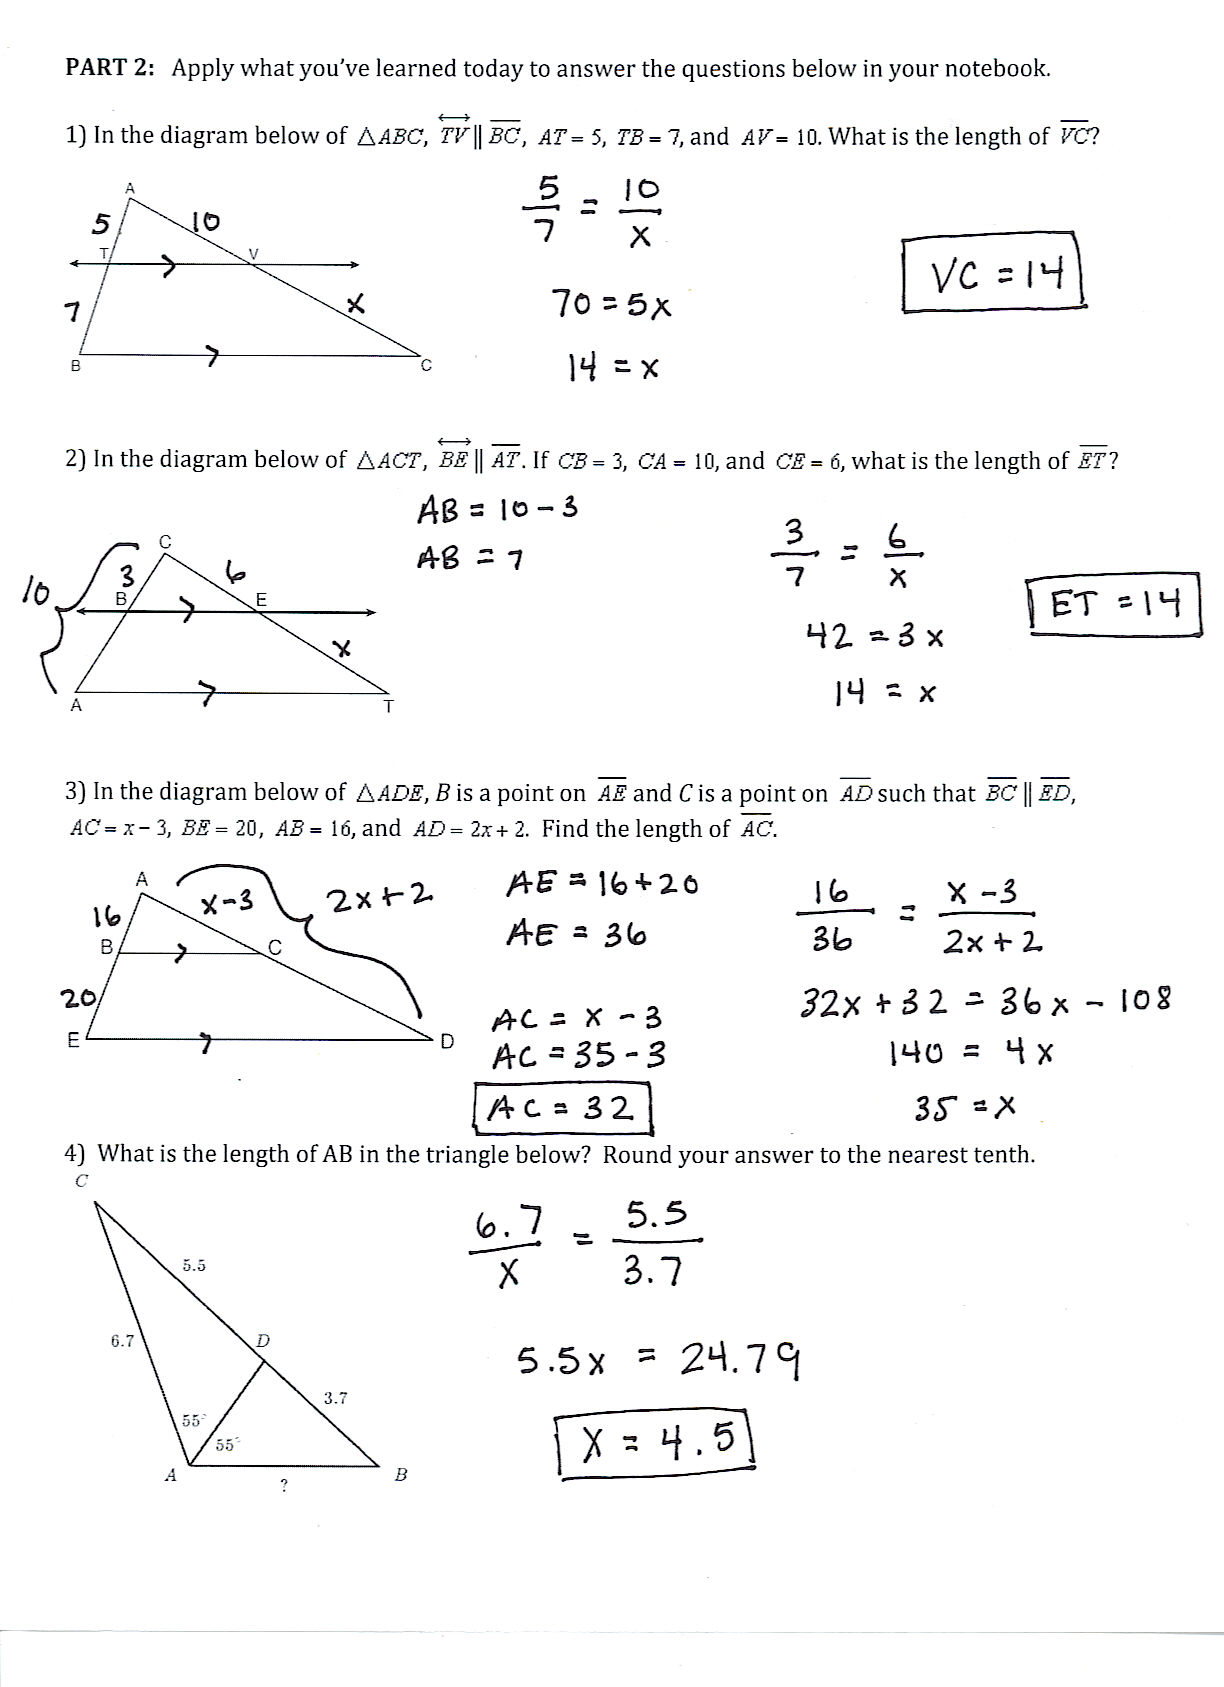 side-splitter-theorem-worksheet-answers-greenise